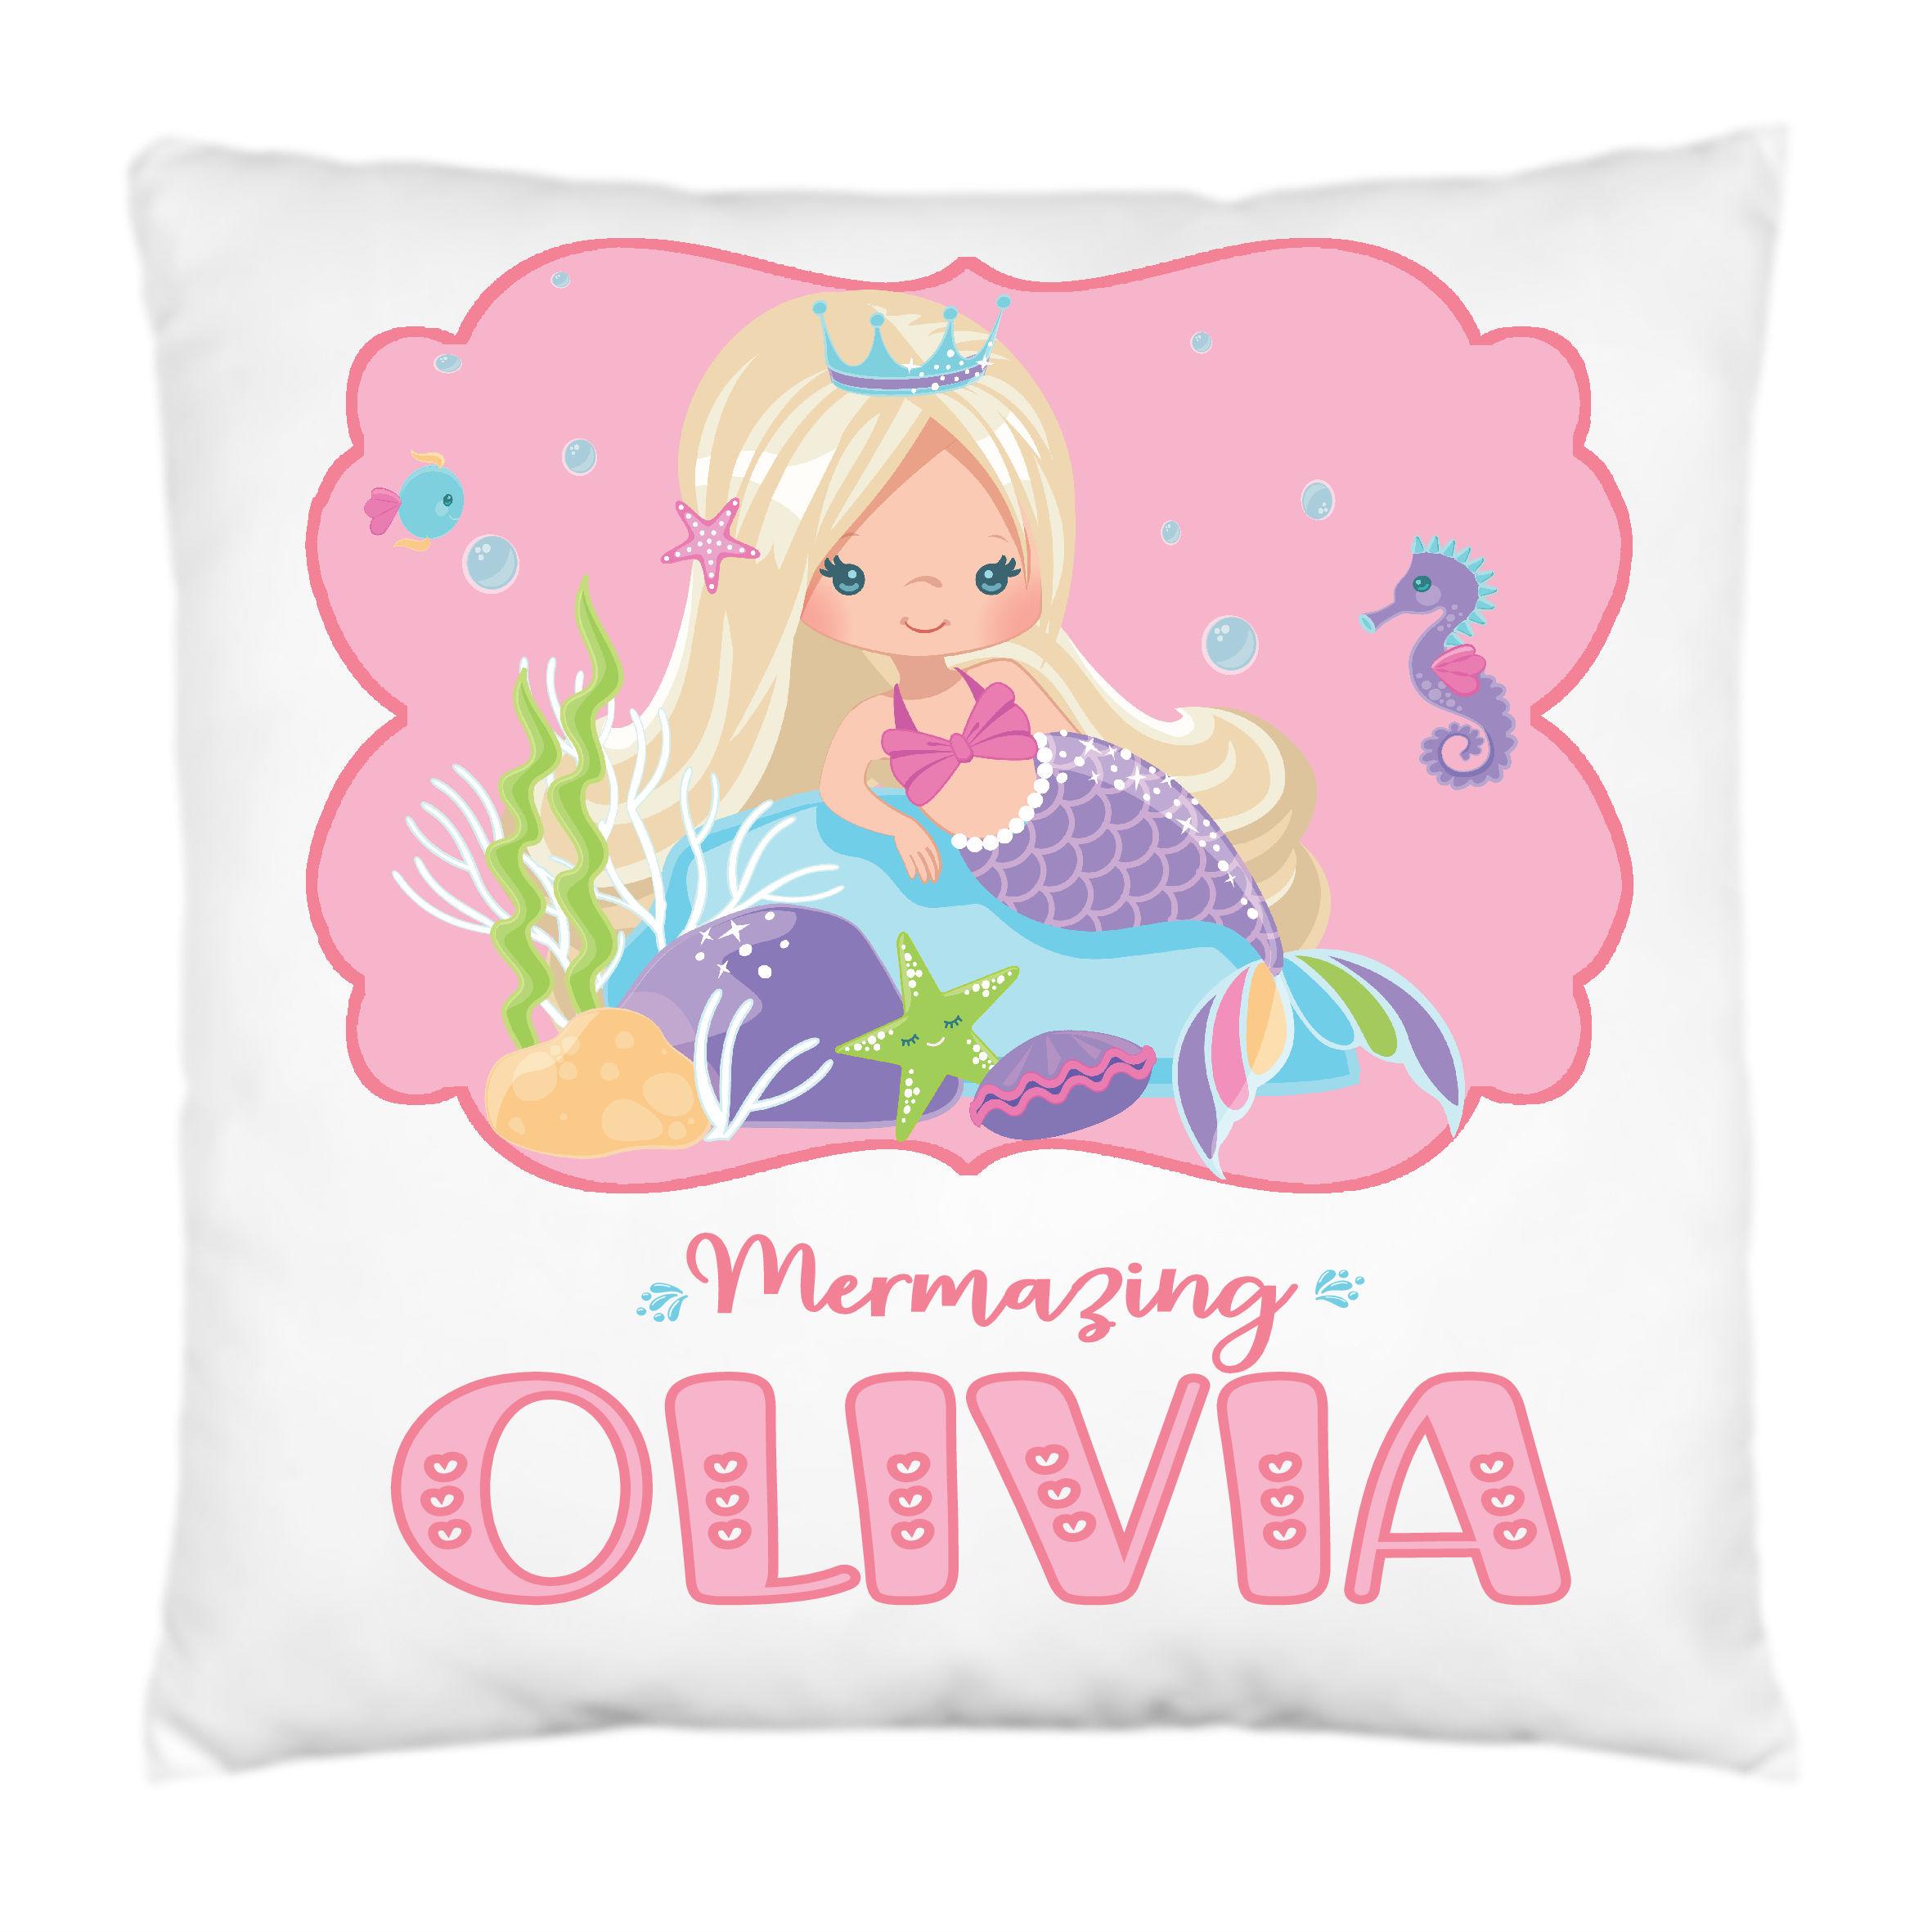 Mermaid Cushion Personalised,Pillow,Throw,Blonde or Dark Hair,Personalised Gift for girls,girls gift,girls bedroom,kids room,home decor